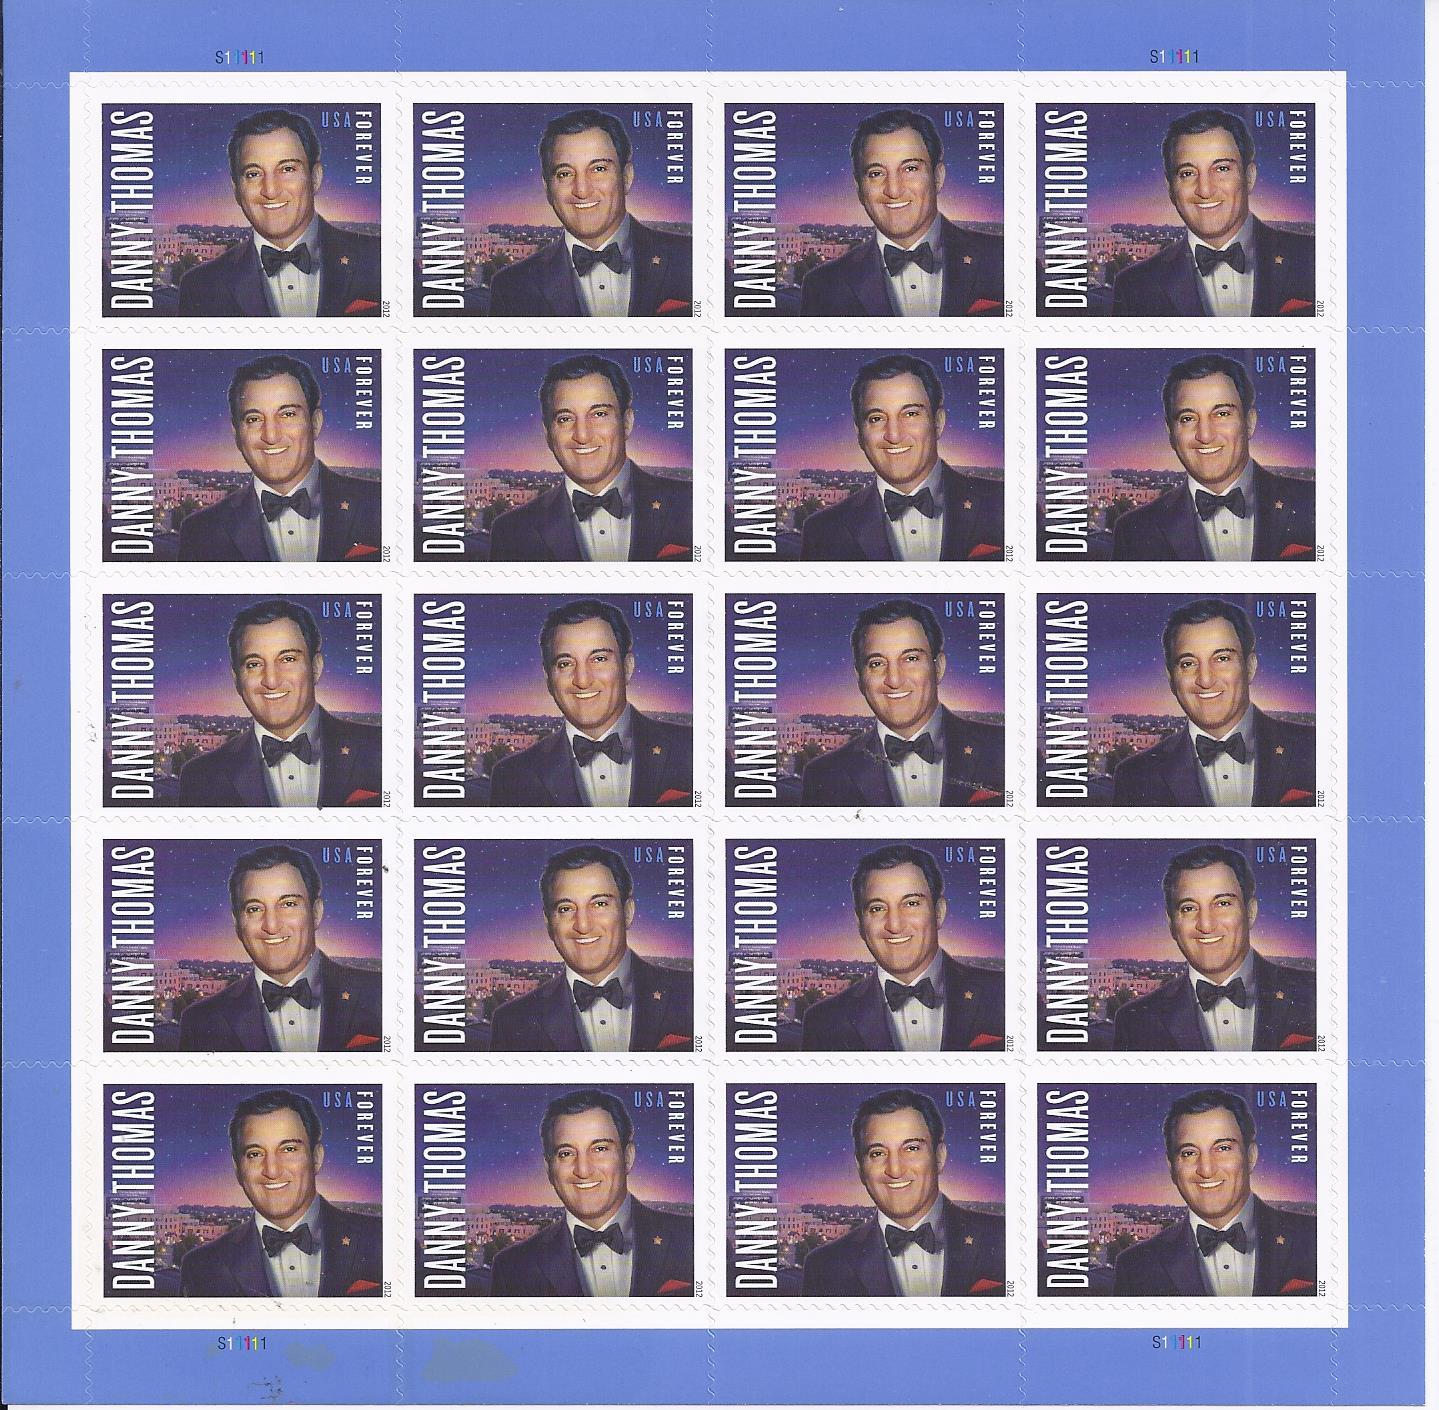 DANNY THOMAS  2012 USPS Forever Stamp Sheet, MNH - $19.95